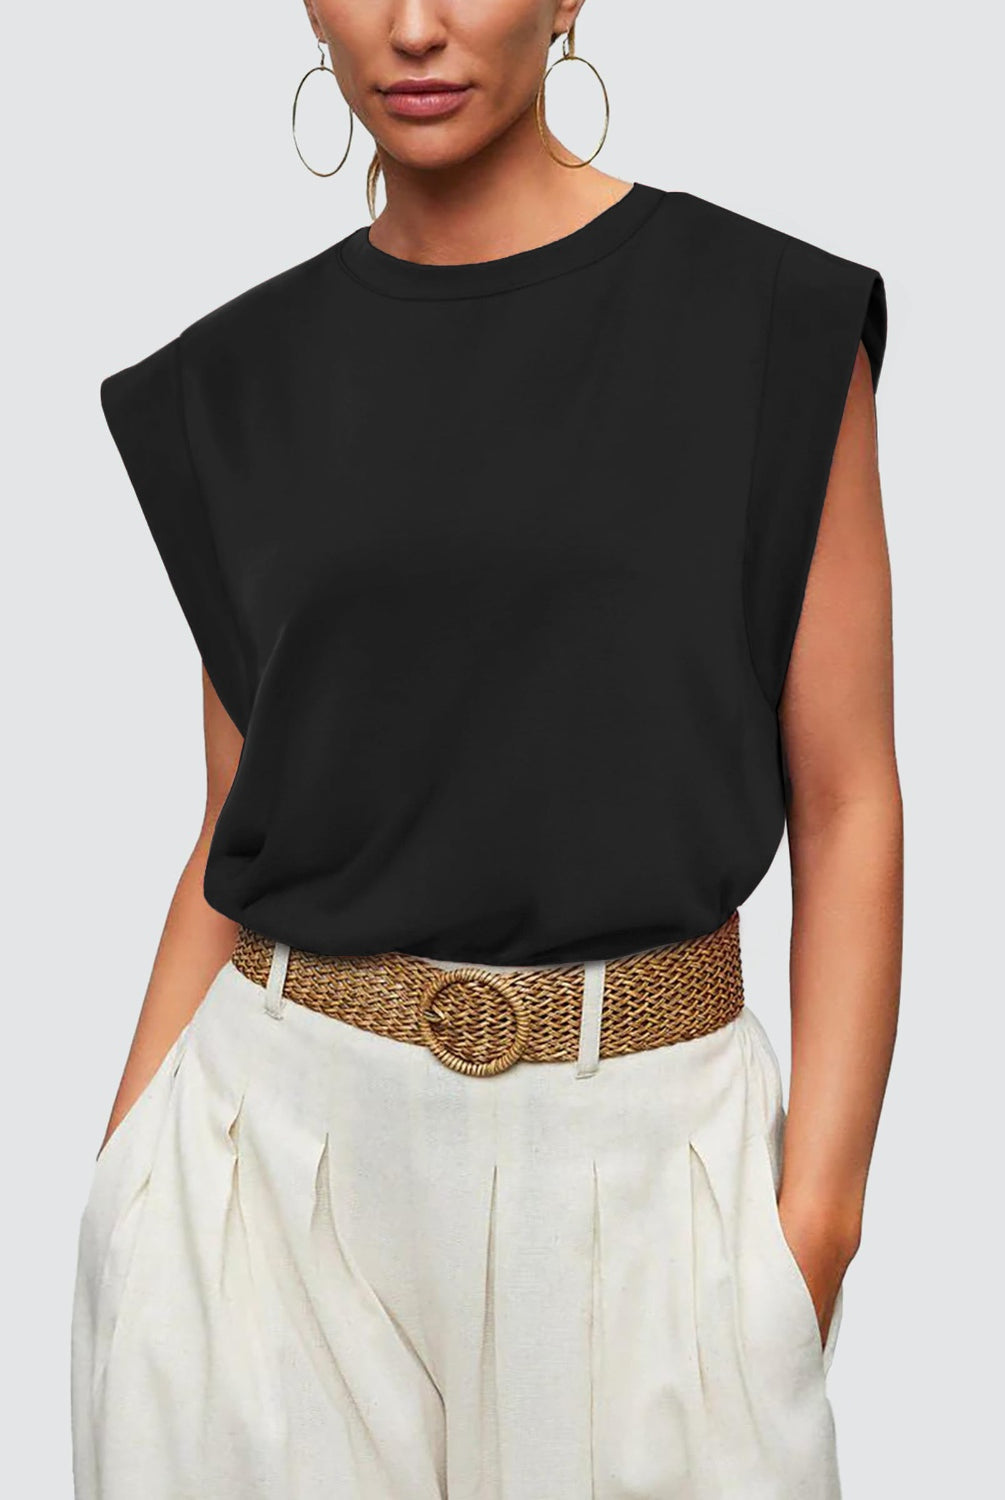 Round Neck Cap Sleeve Tank-Krush Kandy, Women's Online Fashion Boutique Located in Phoenix, Arizona (Scottsdale Area)